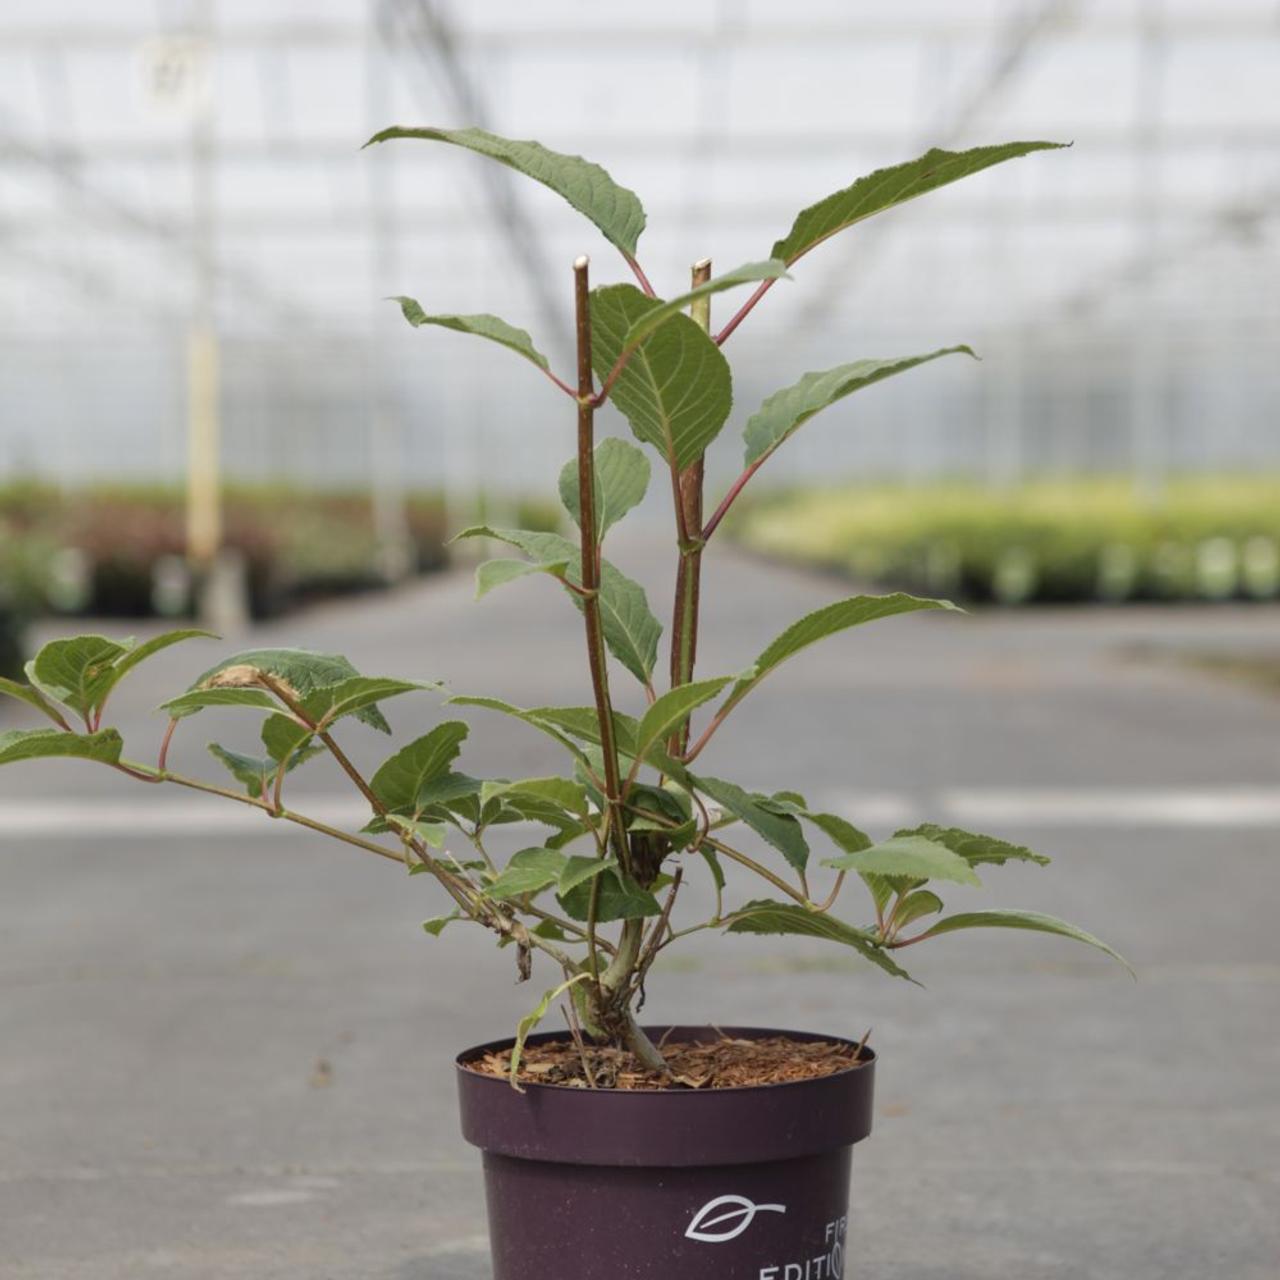 Hydrangea heterom. 'Bretschneideri' plant